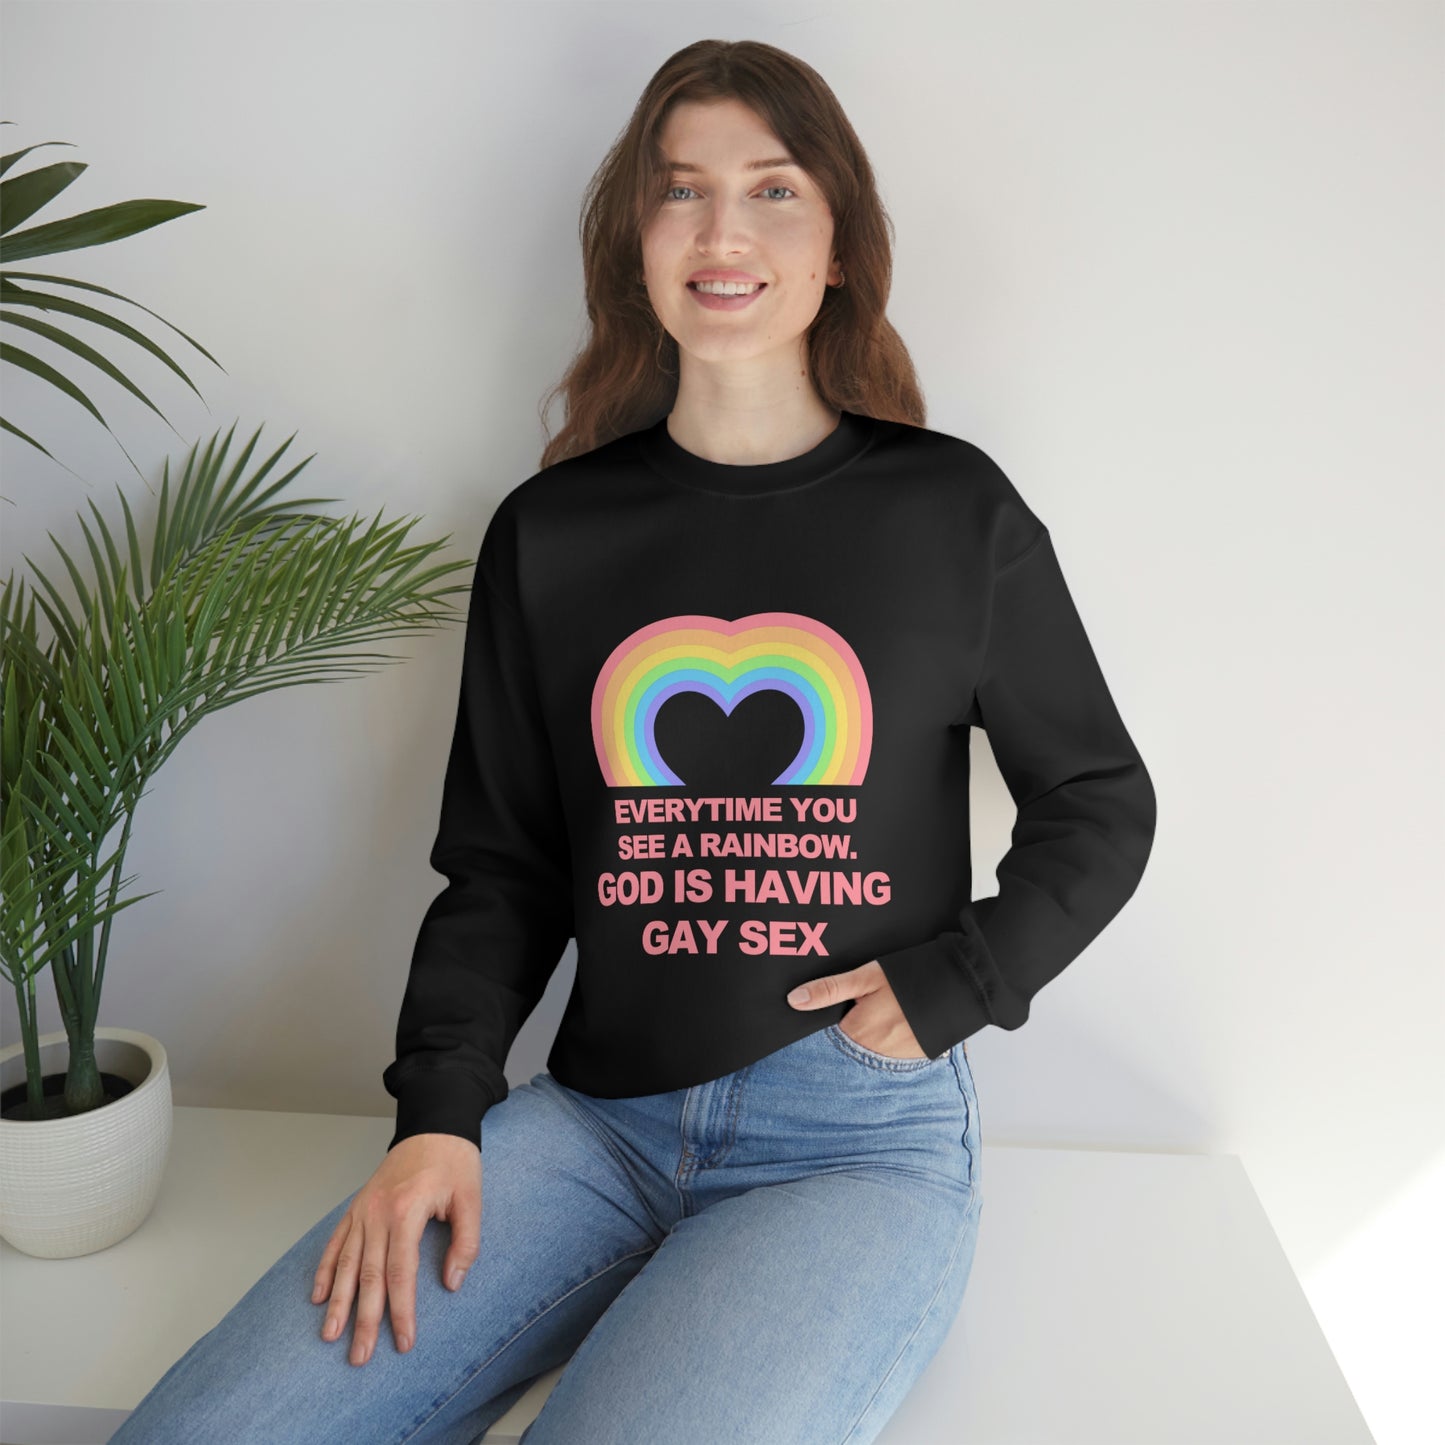 Everytime you see a rainbow, god is having gay sex Sweatshirt